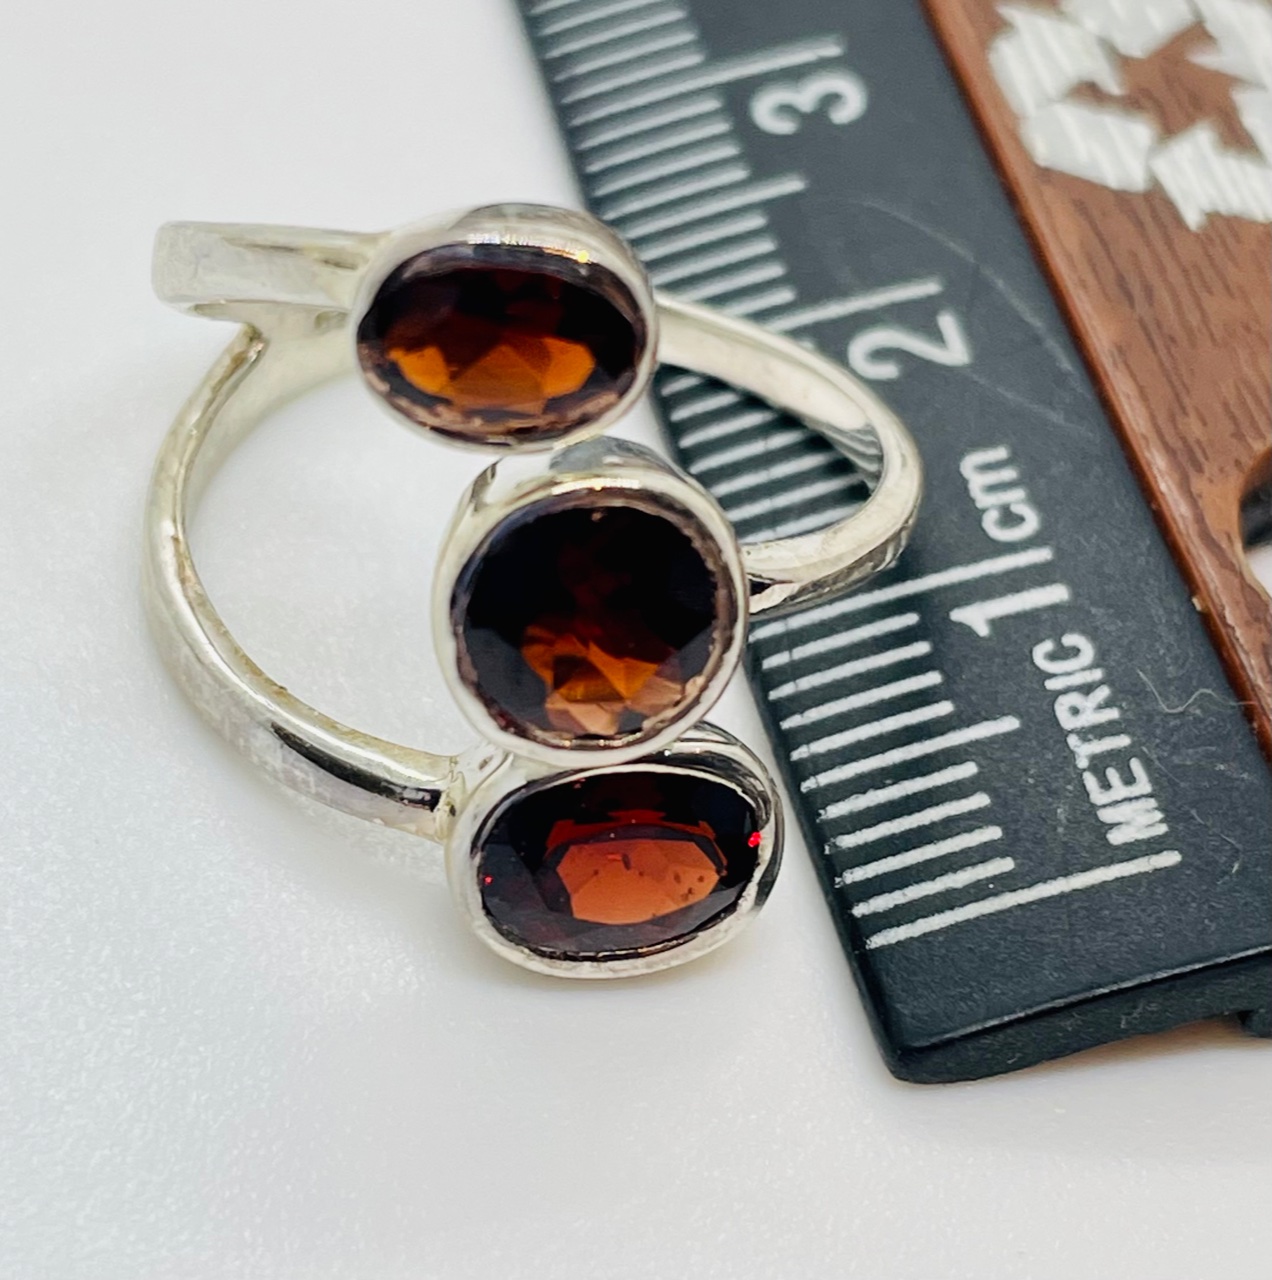 Garnet Ring 6.68 grams Size 7-9 (adjustable)